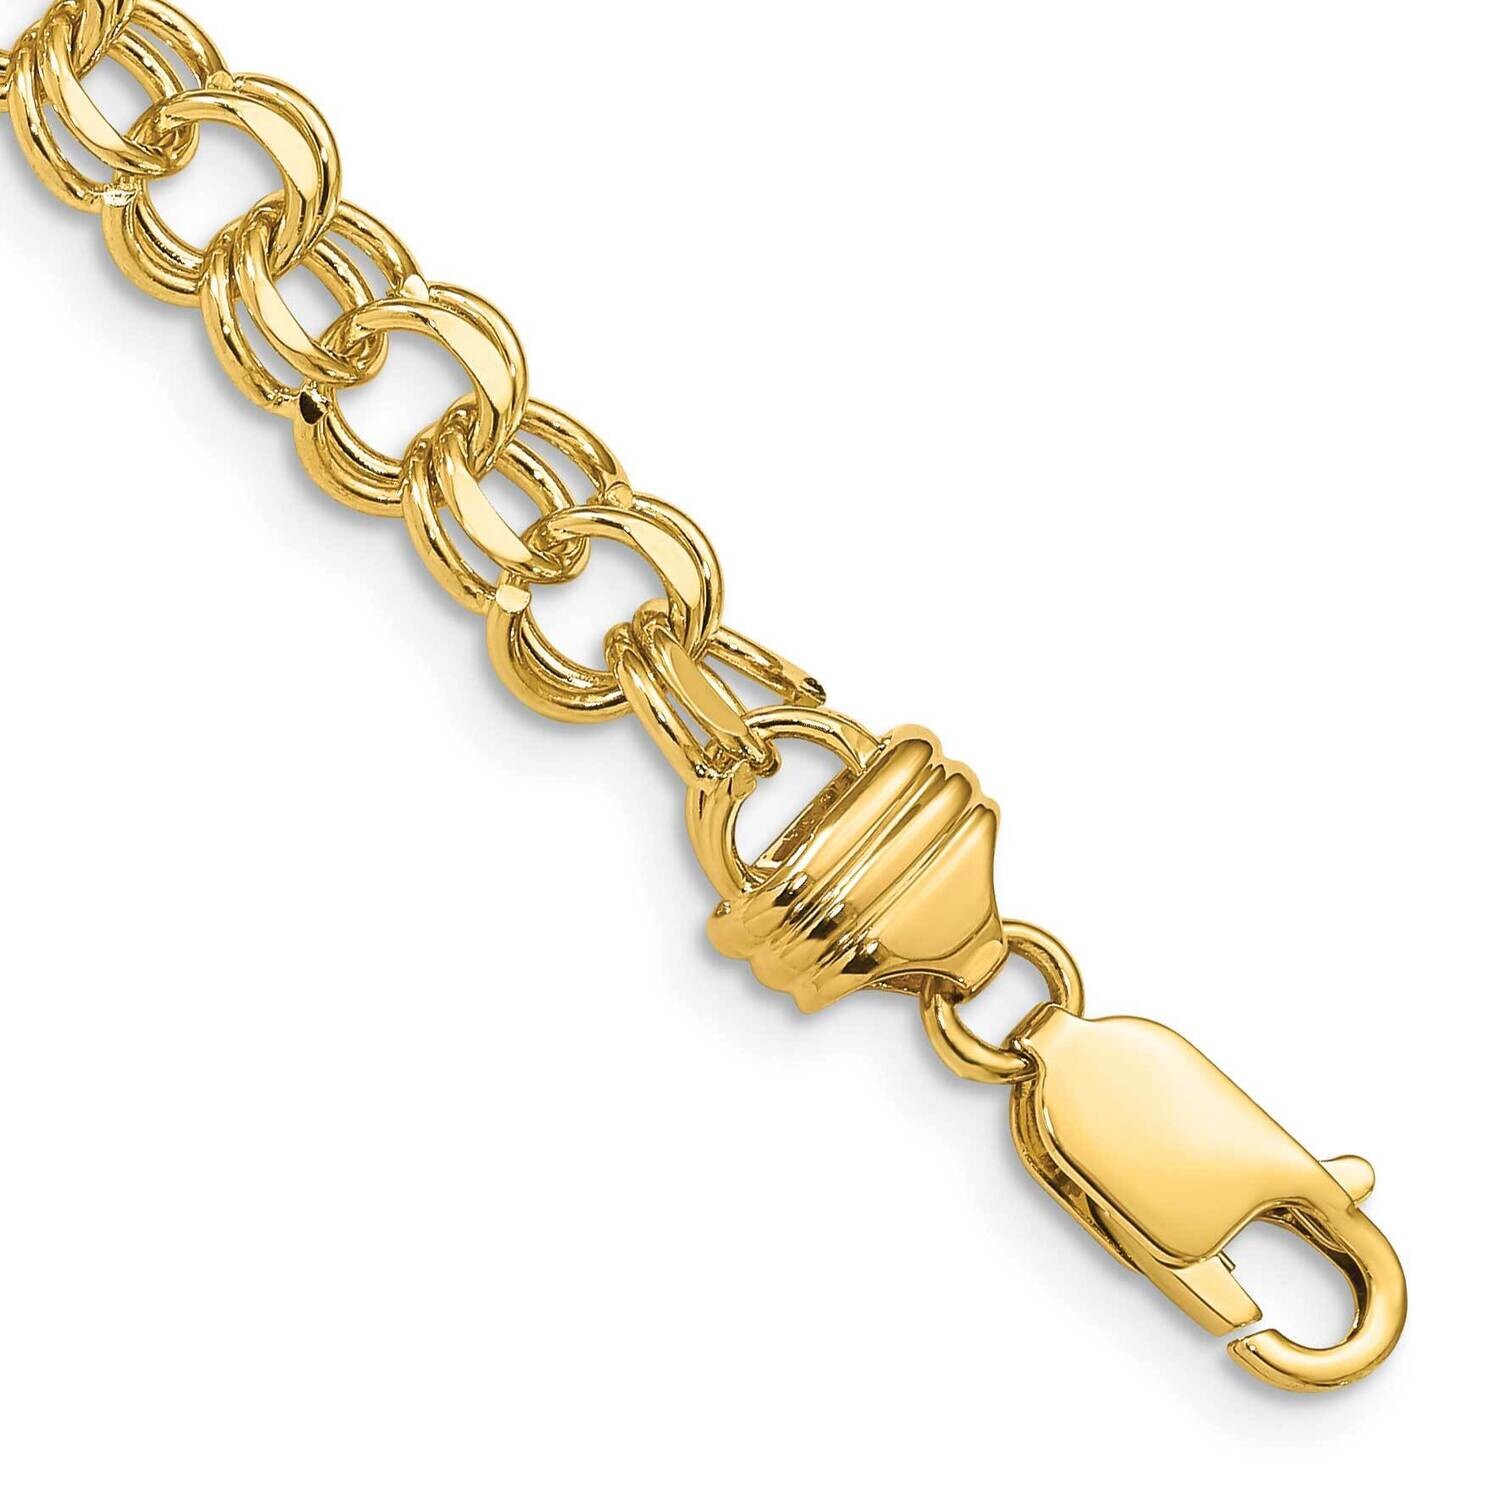 7 Inch 6.5mm Solid Double Link Charm Bracelet 10k Gold 10DOH18-7